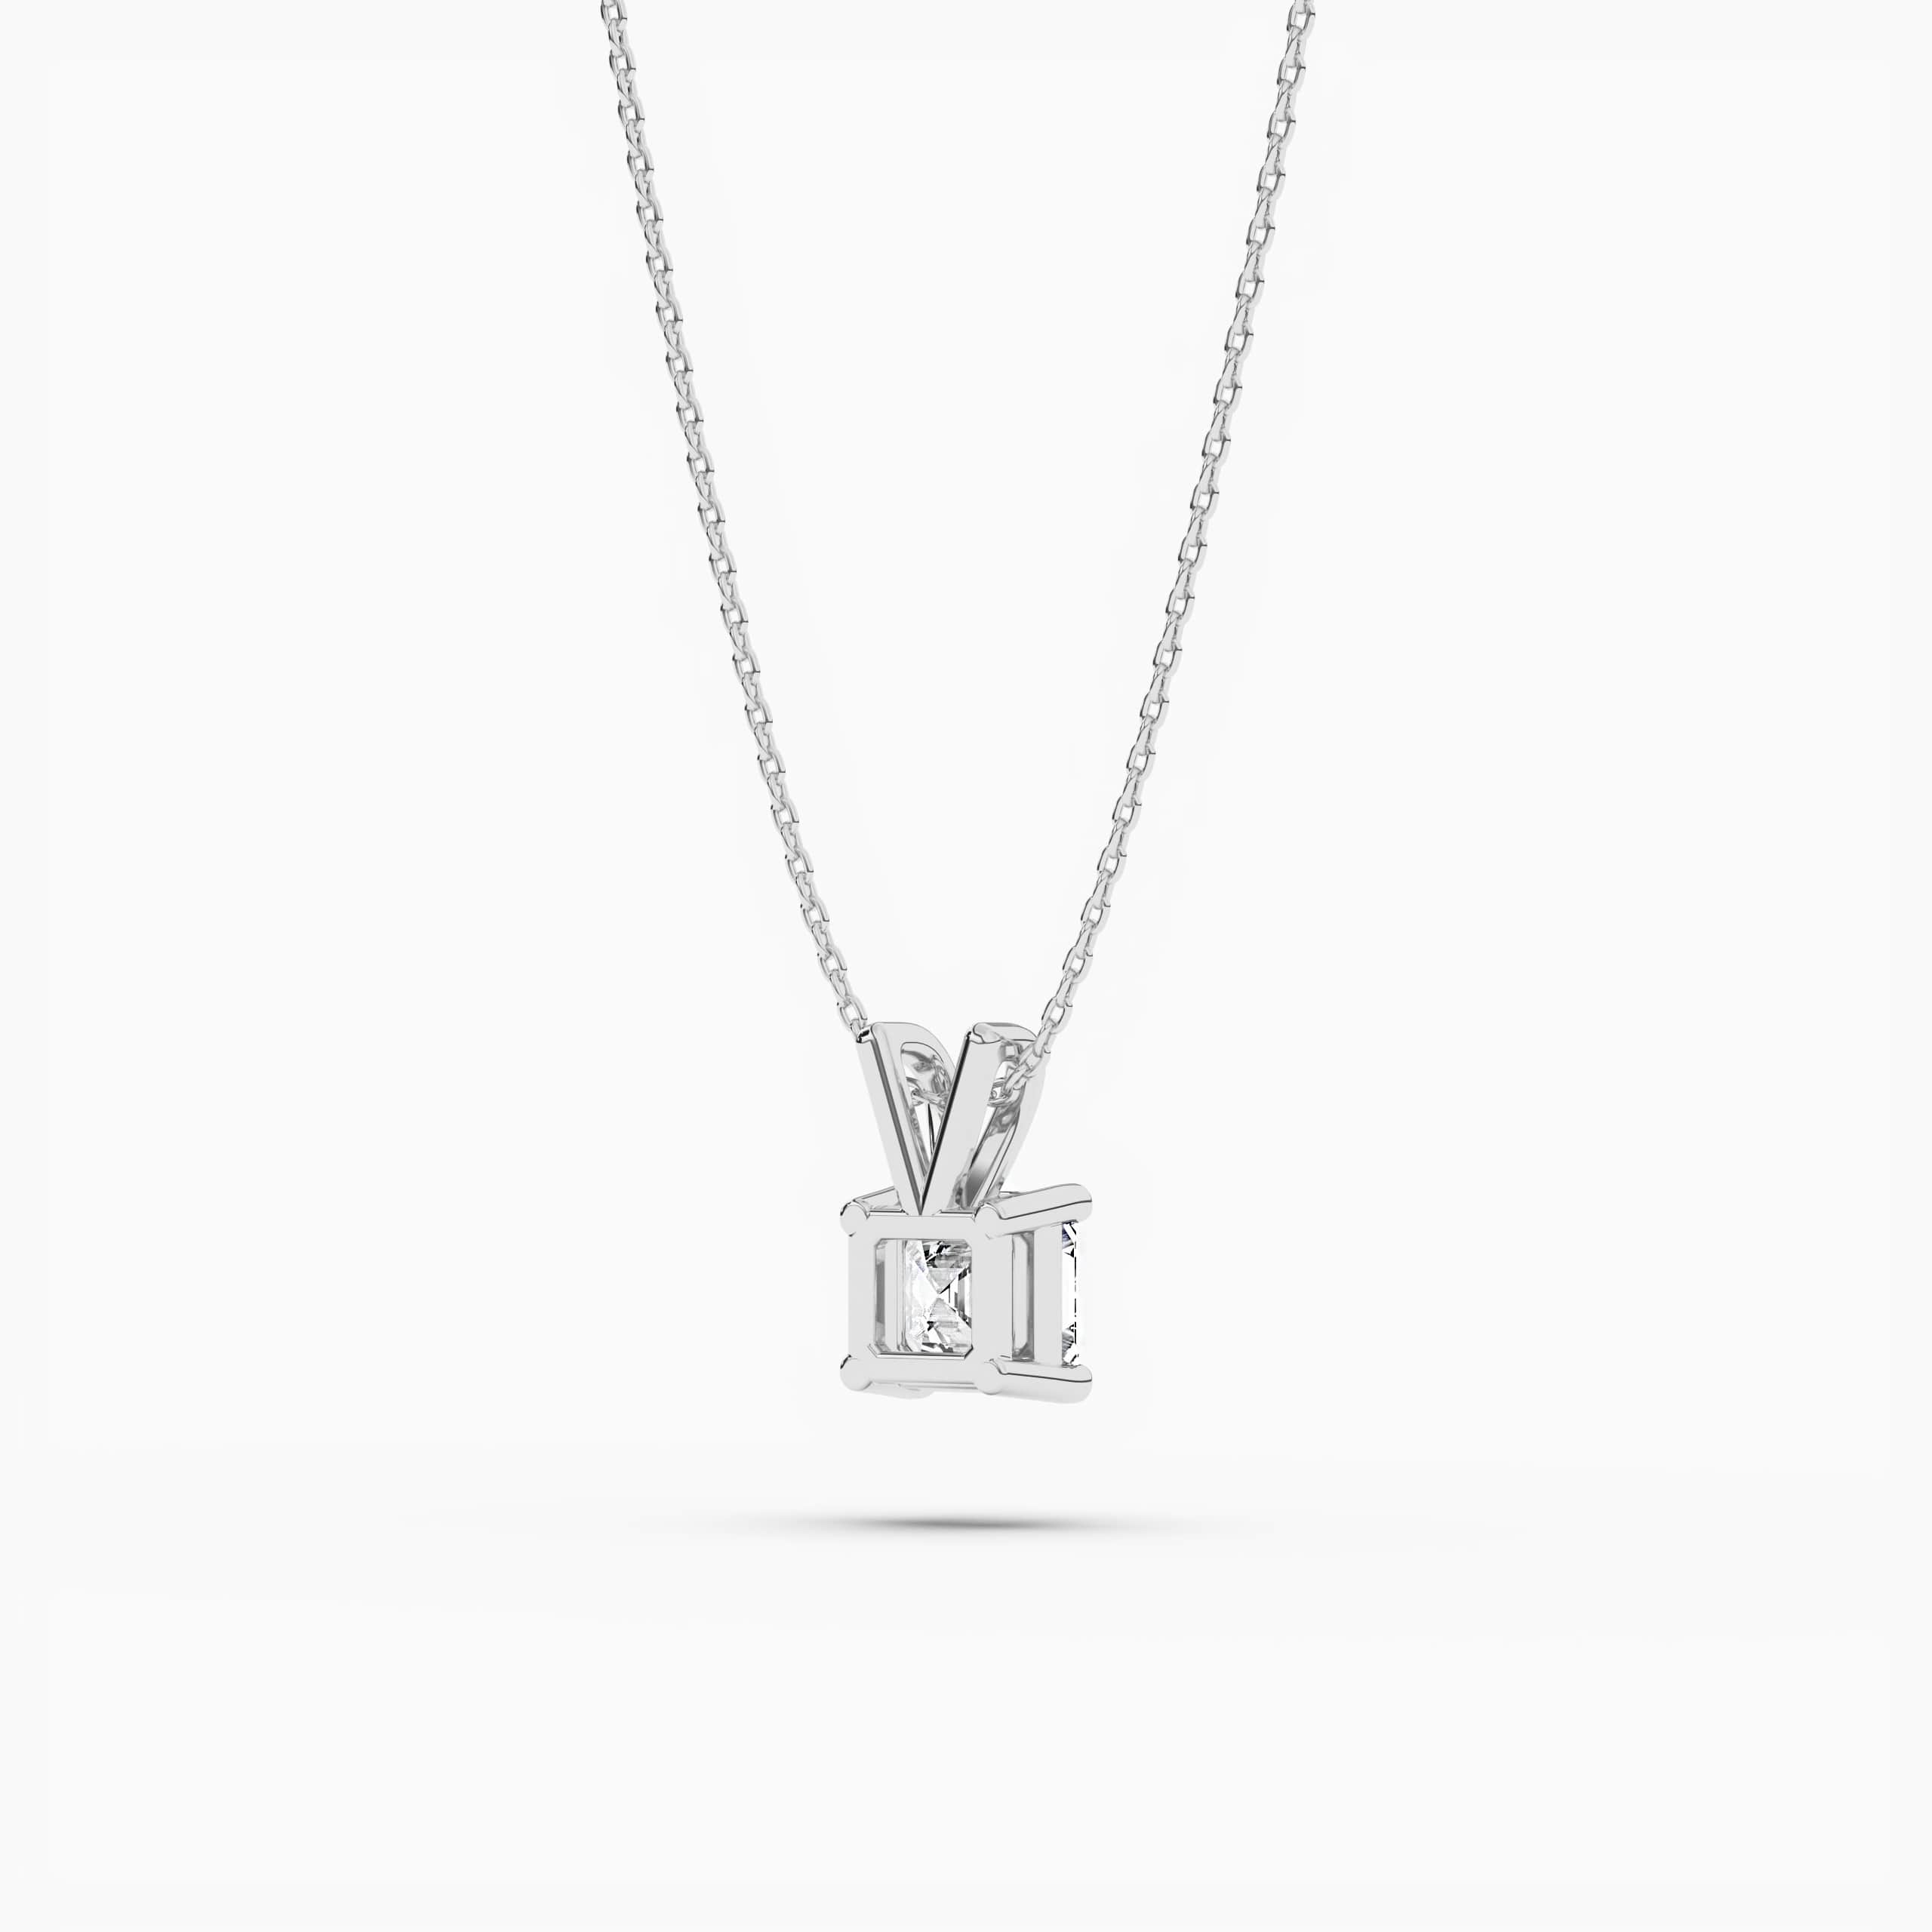 Asscher Cut Solitaire Diamond Necklace in White Gold